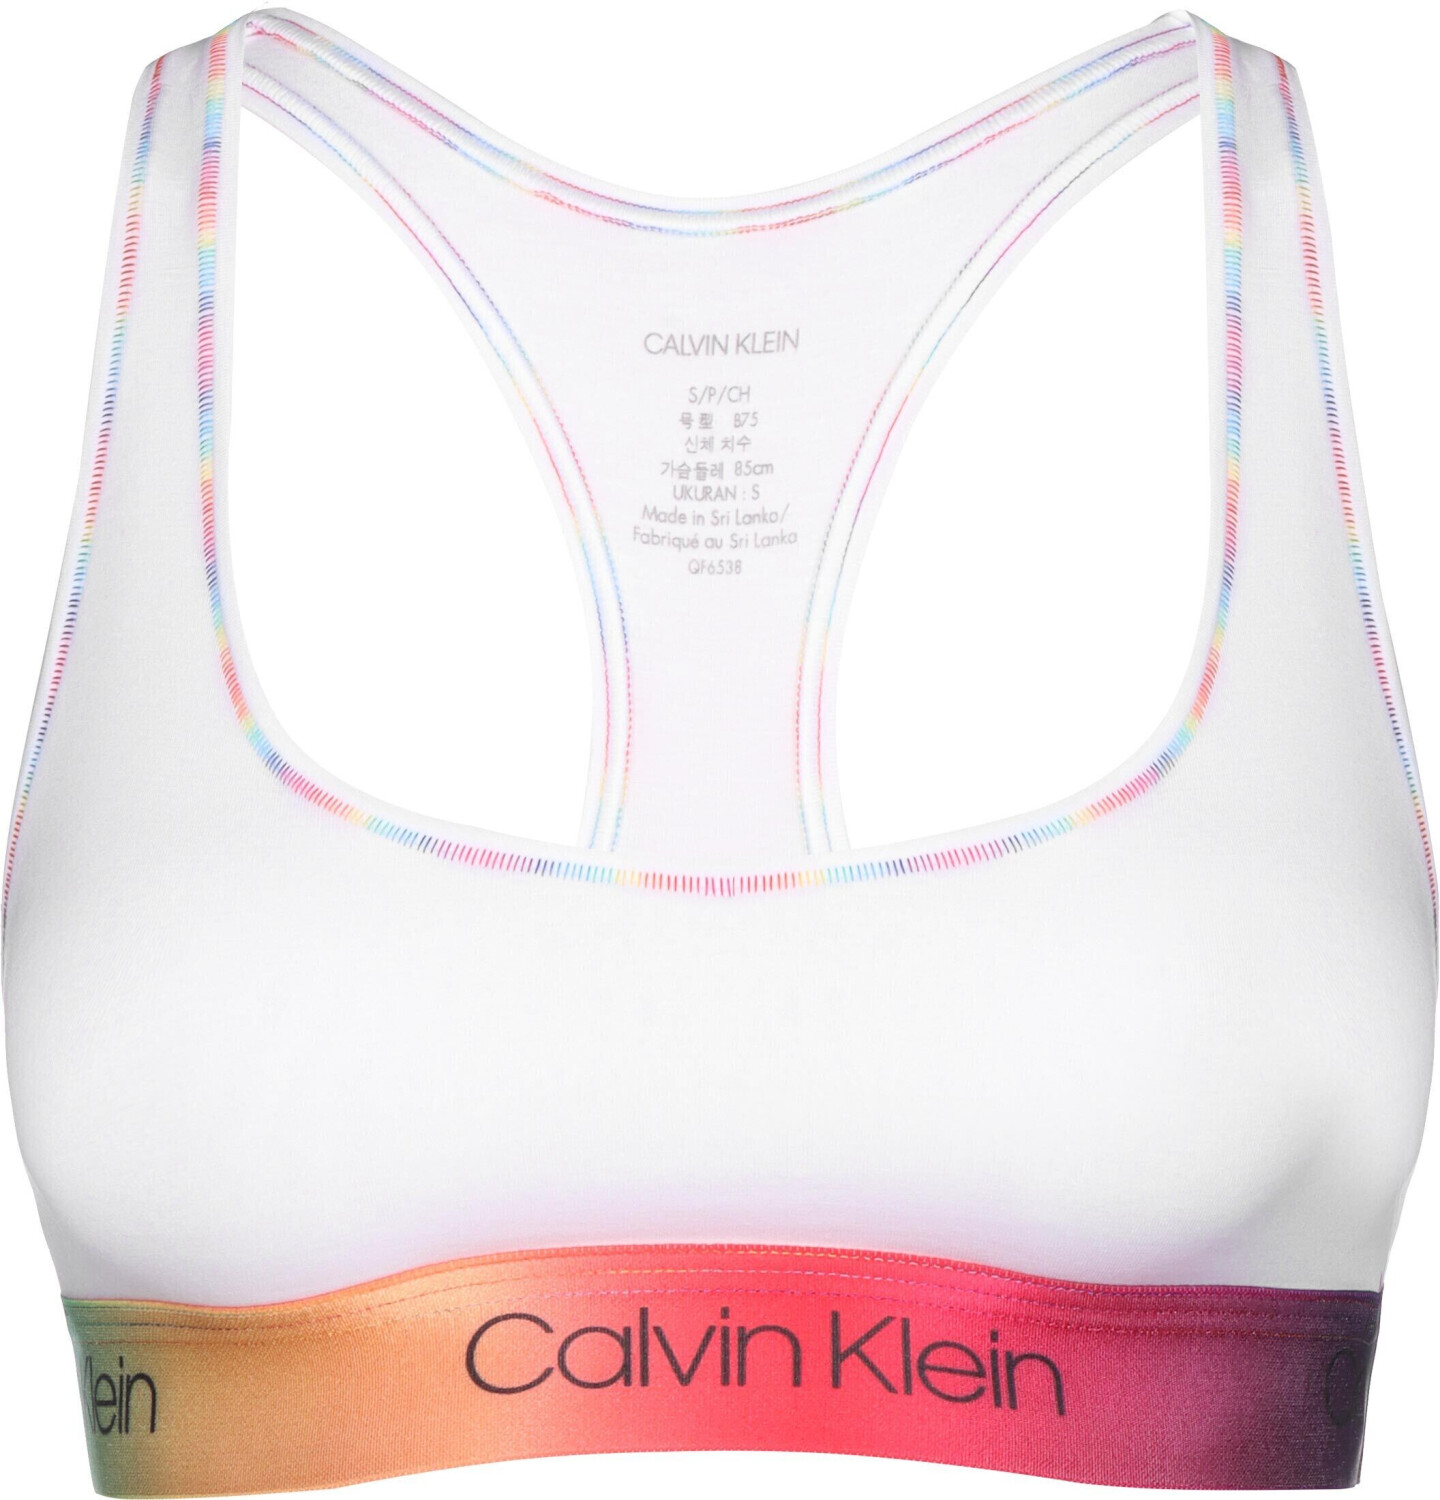 Calvin Klein Girls' Seamless Long Line Wirefree Comfort Bralette Bra